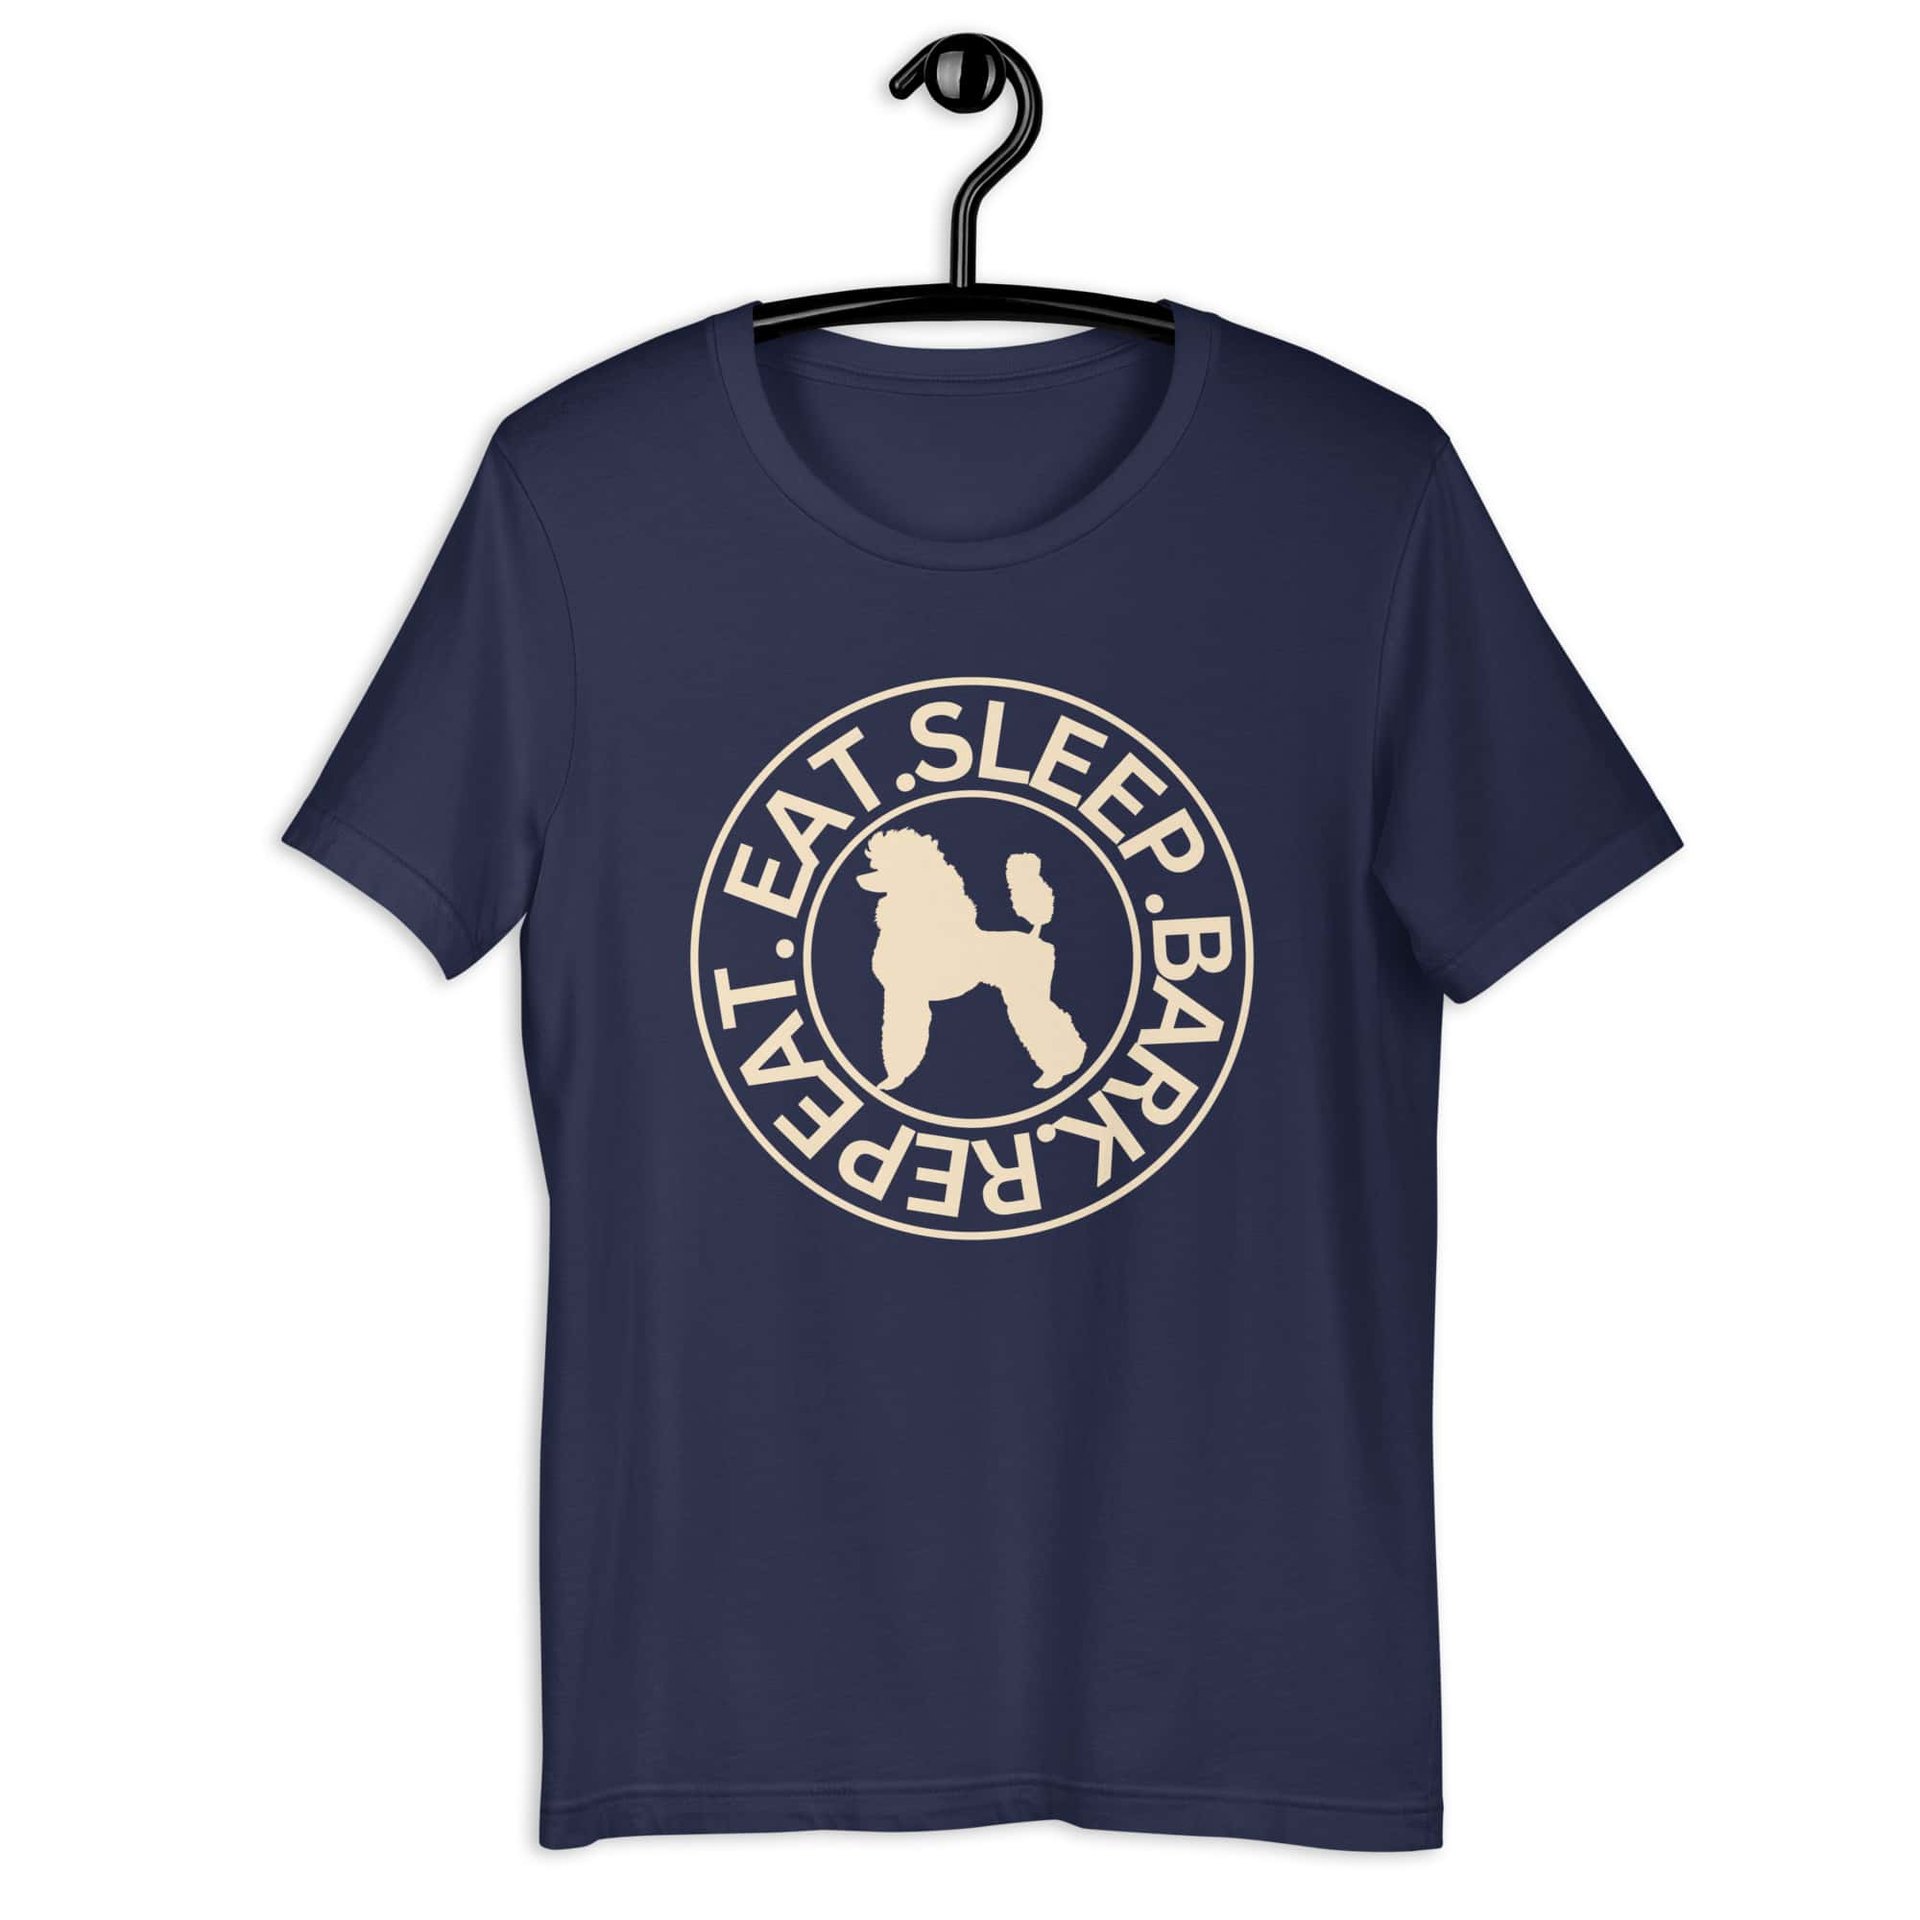 Eat Sleep Repeat Bark Miniature Poodle Unisex T-Shirt. Navy Blue